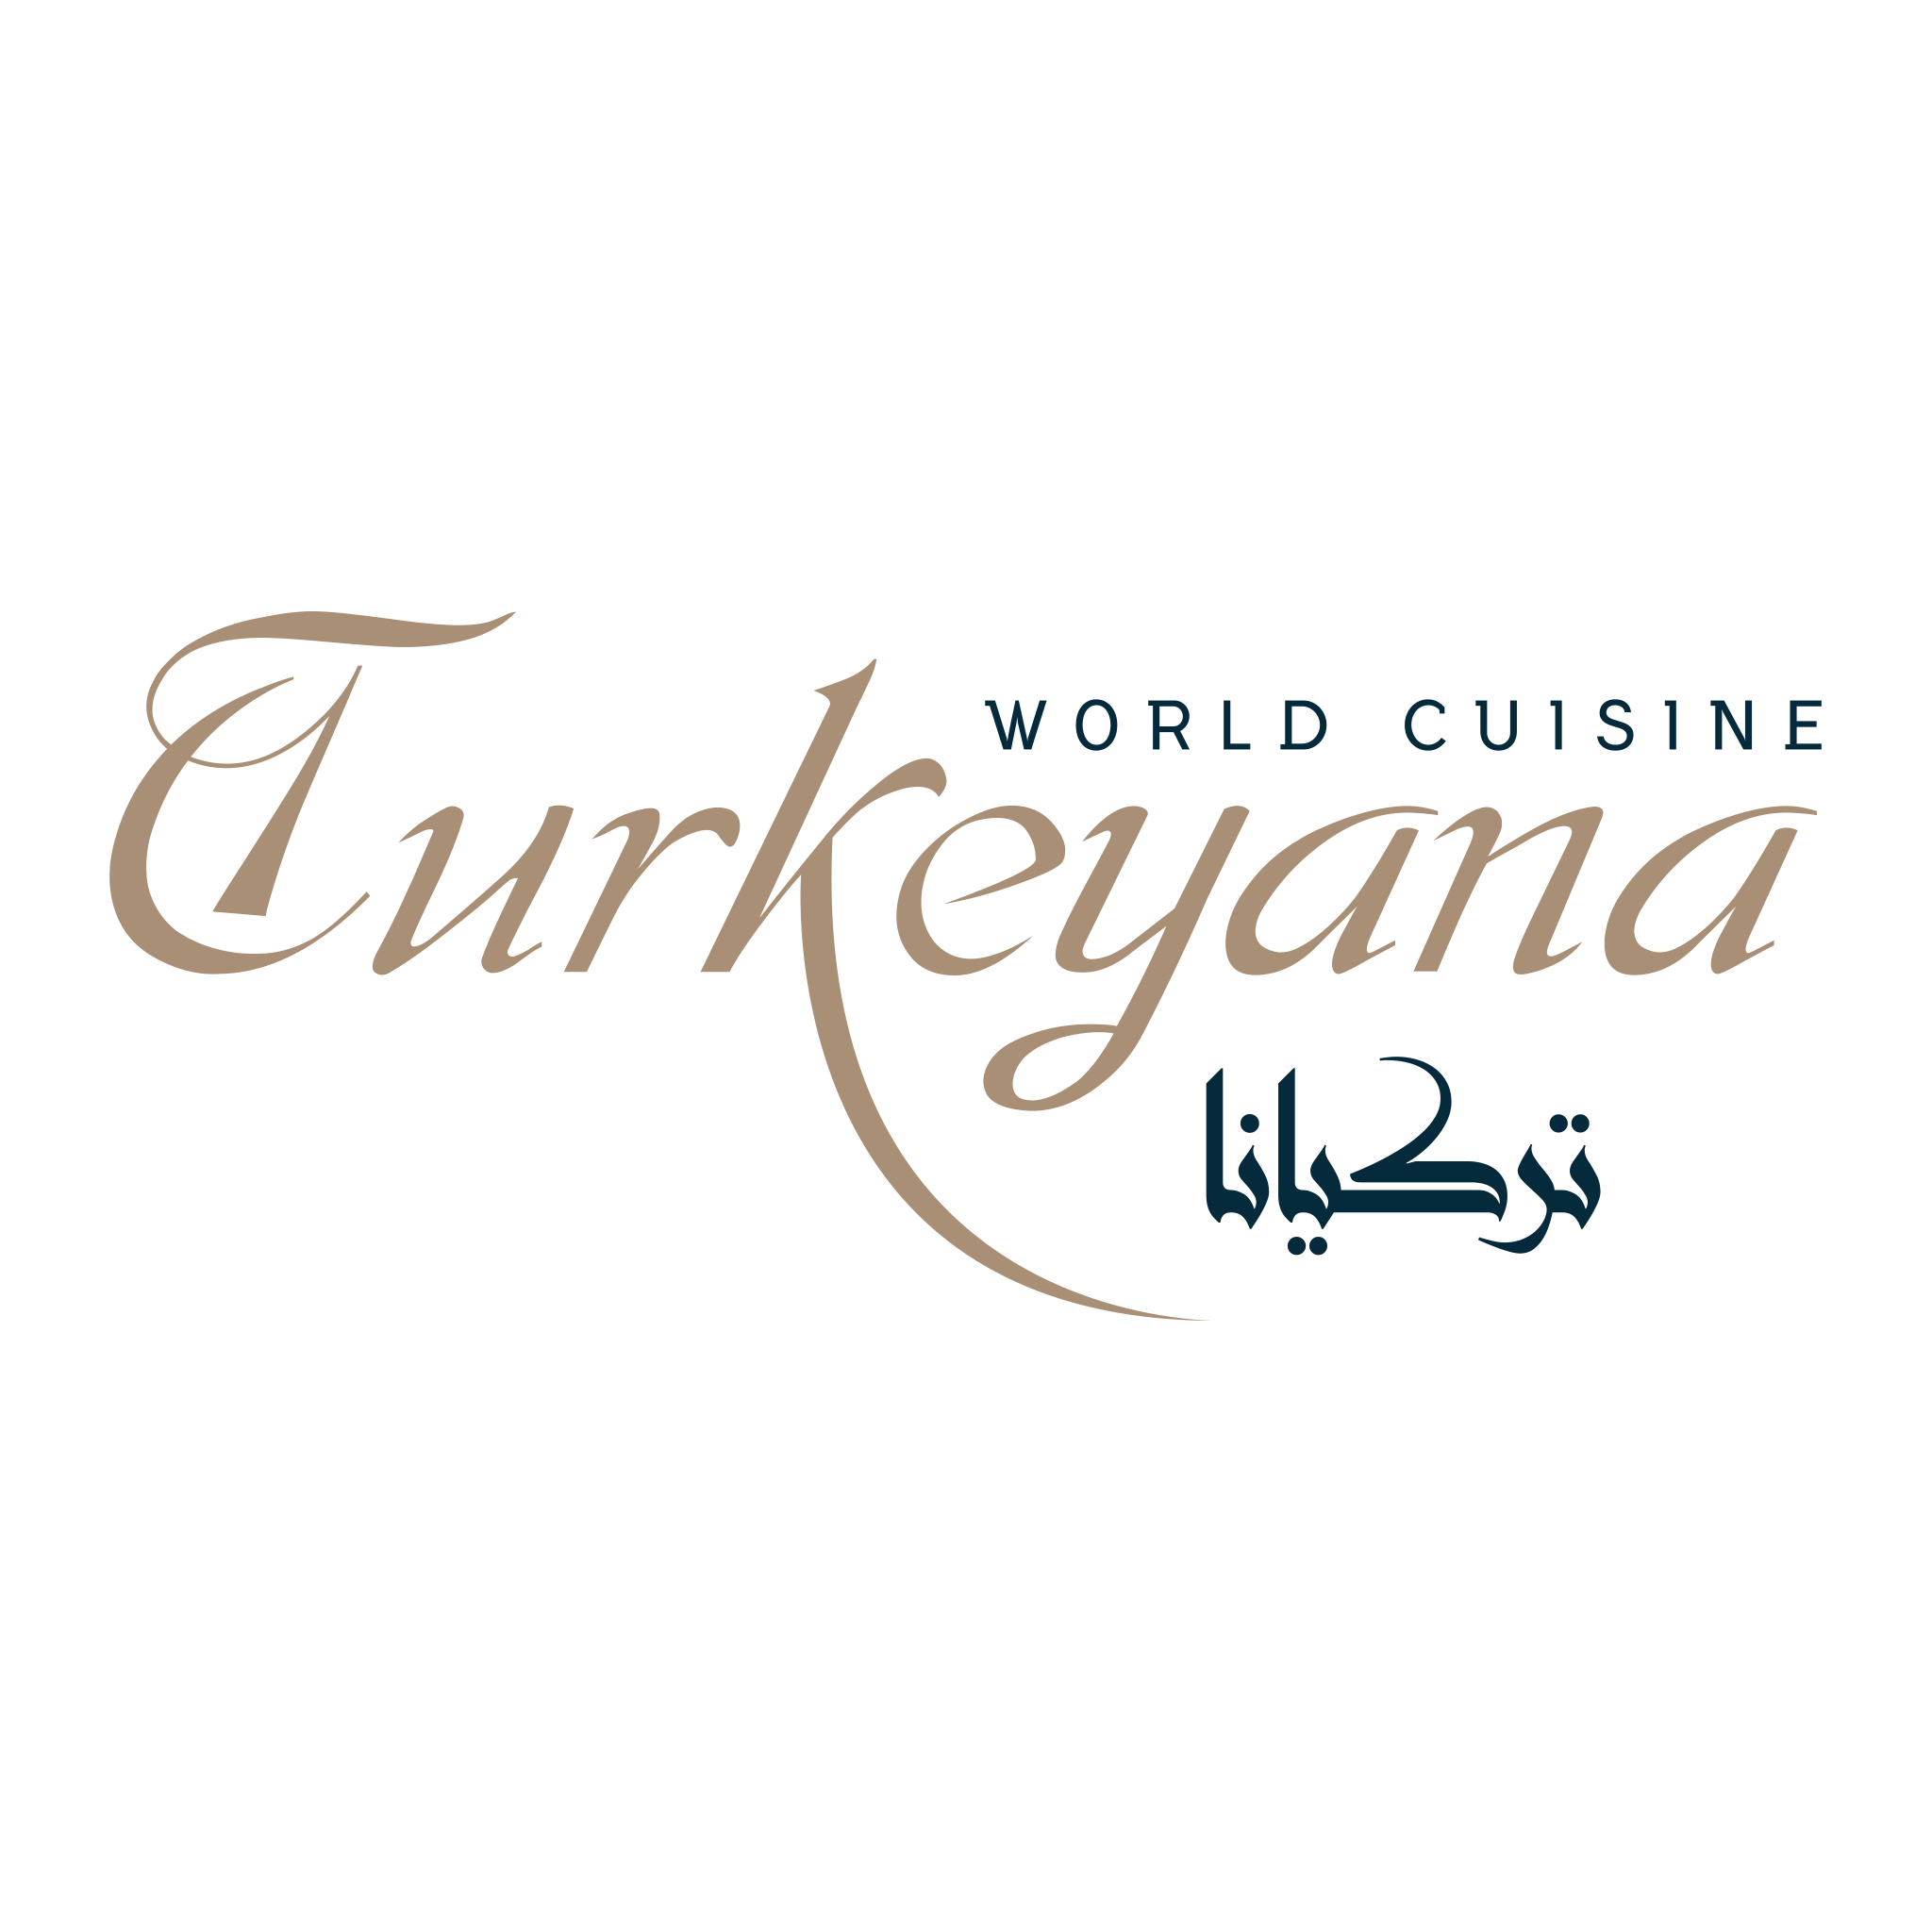 Turkeyana Restaurant